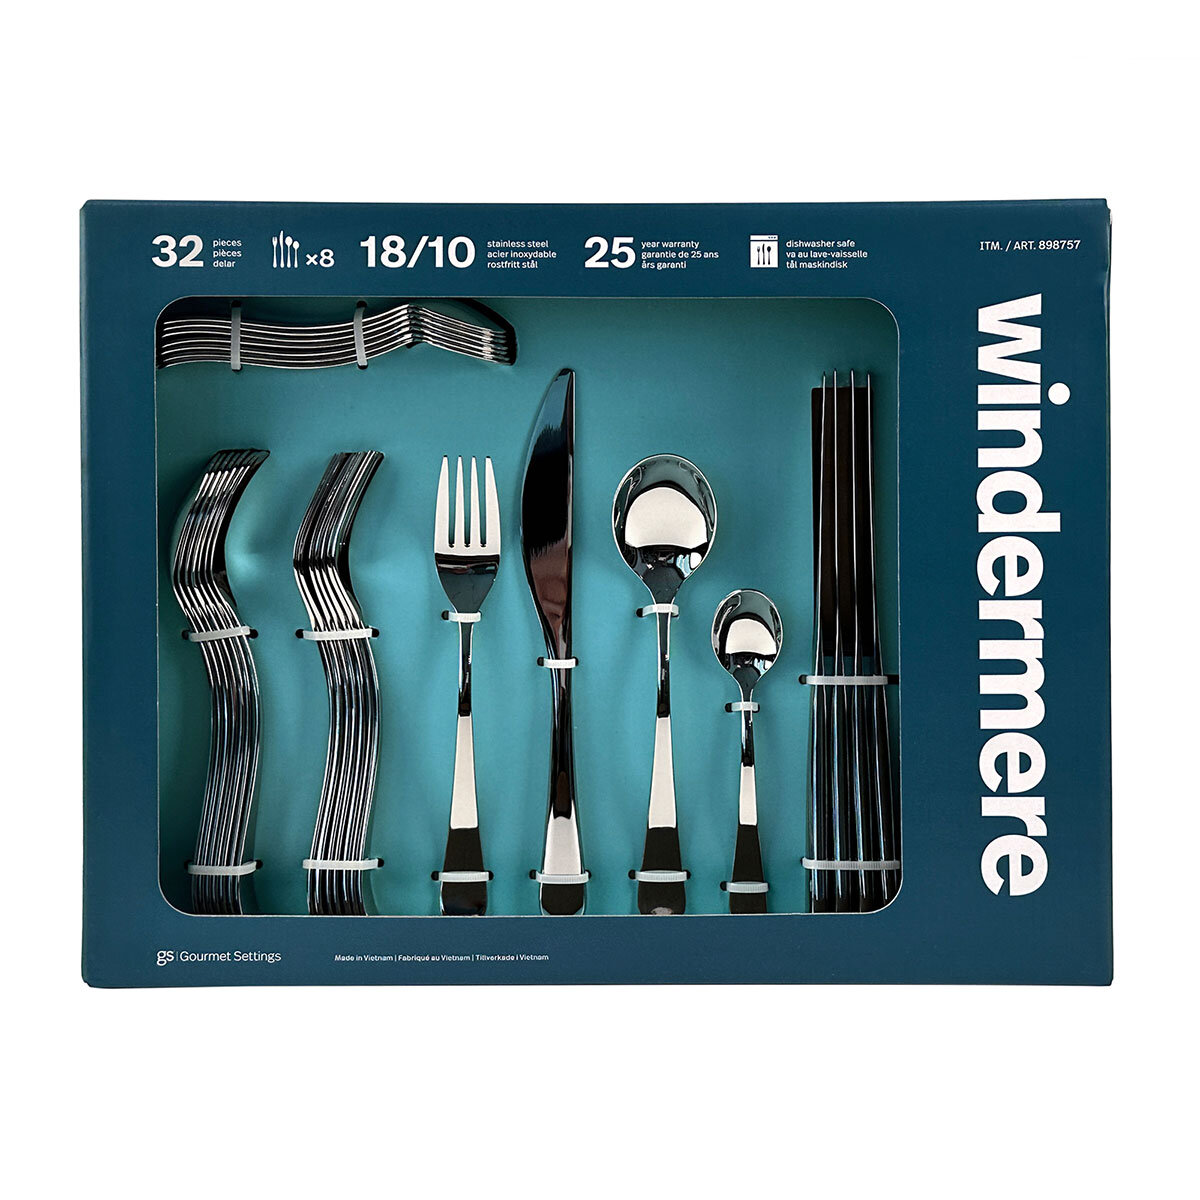 Windermere Stainless Steel Cutlery Set, 32 Piece